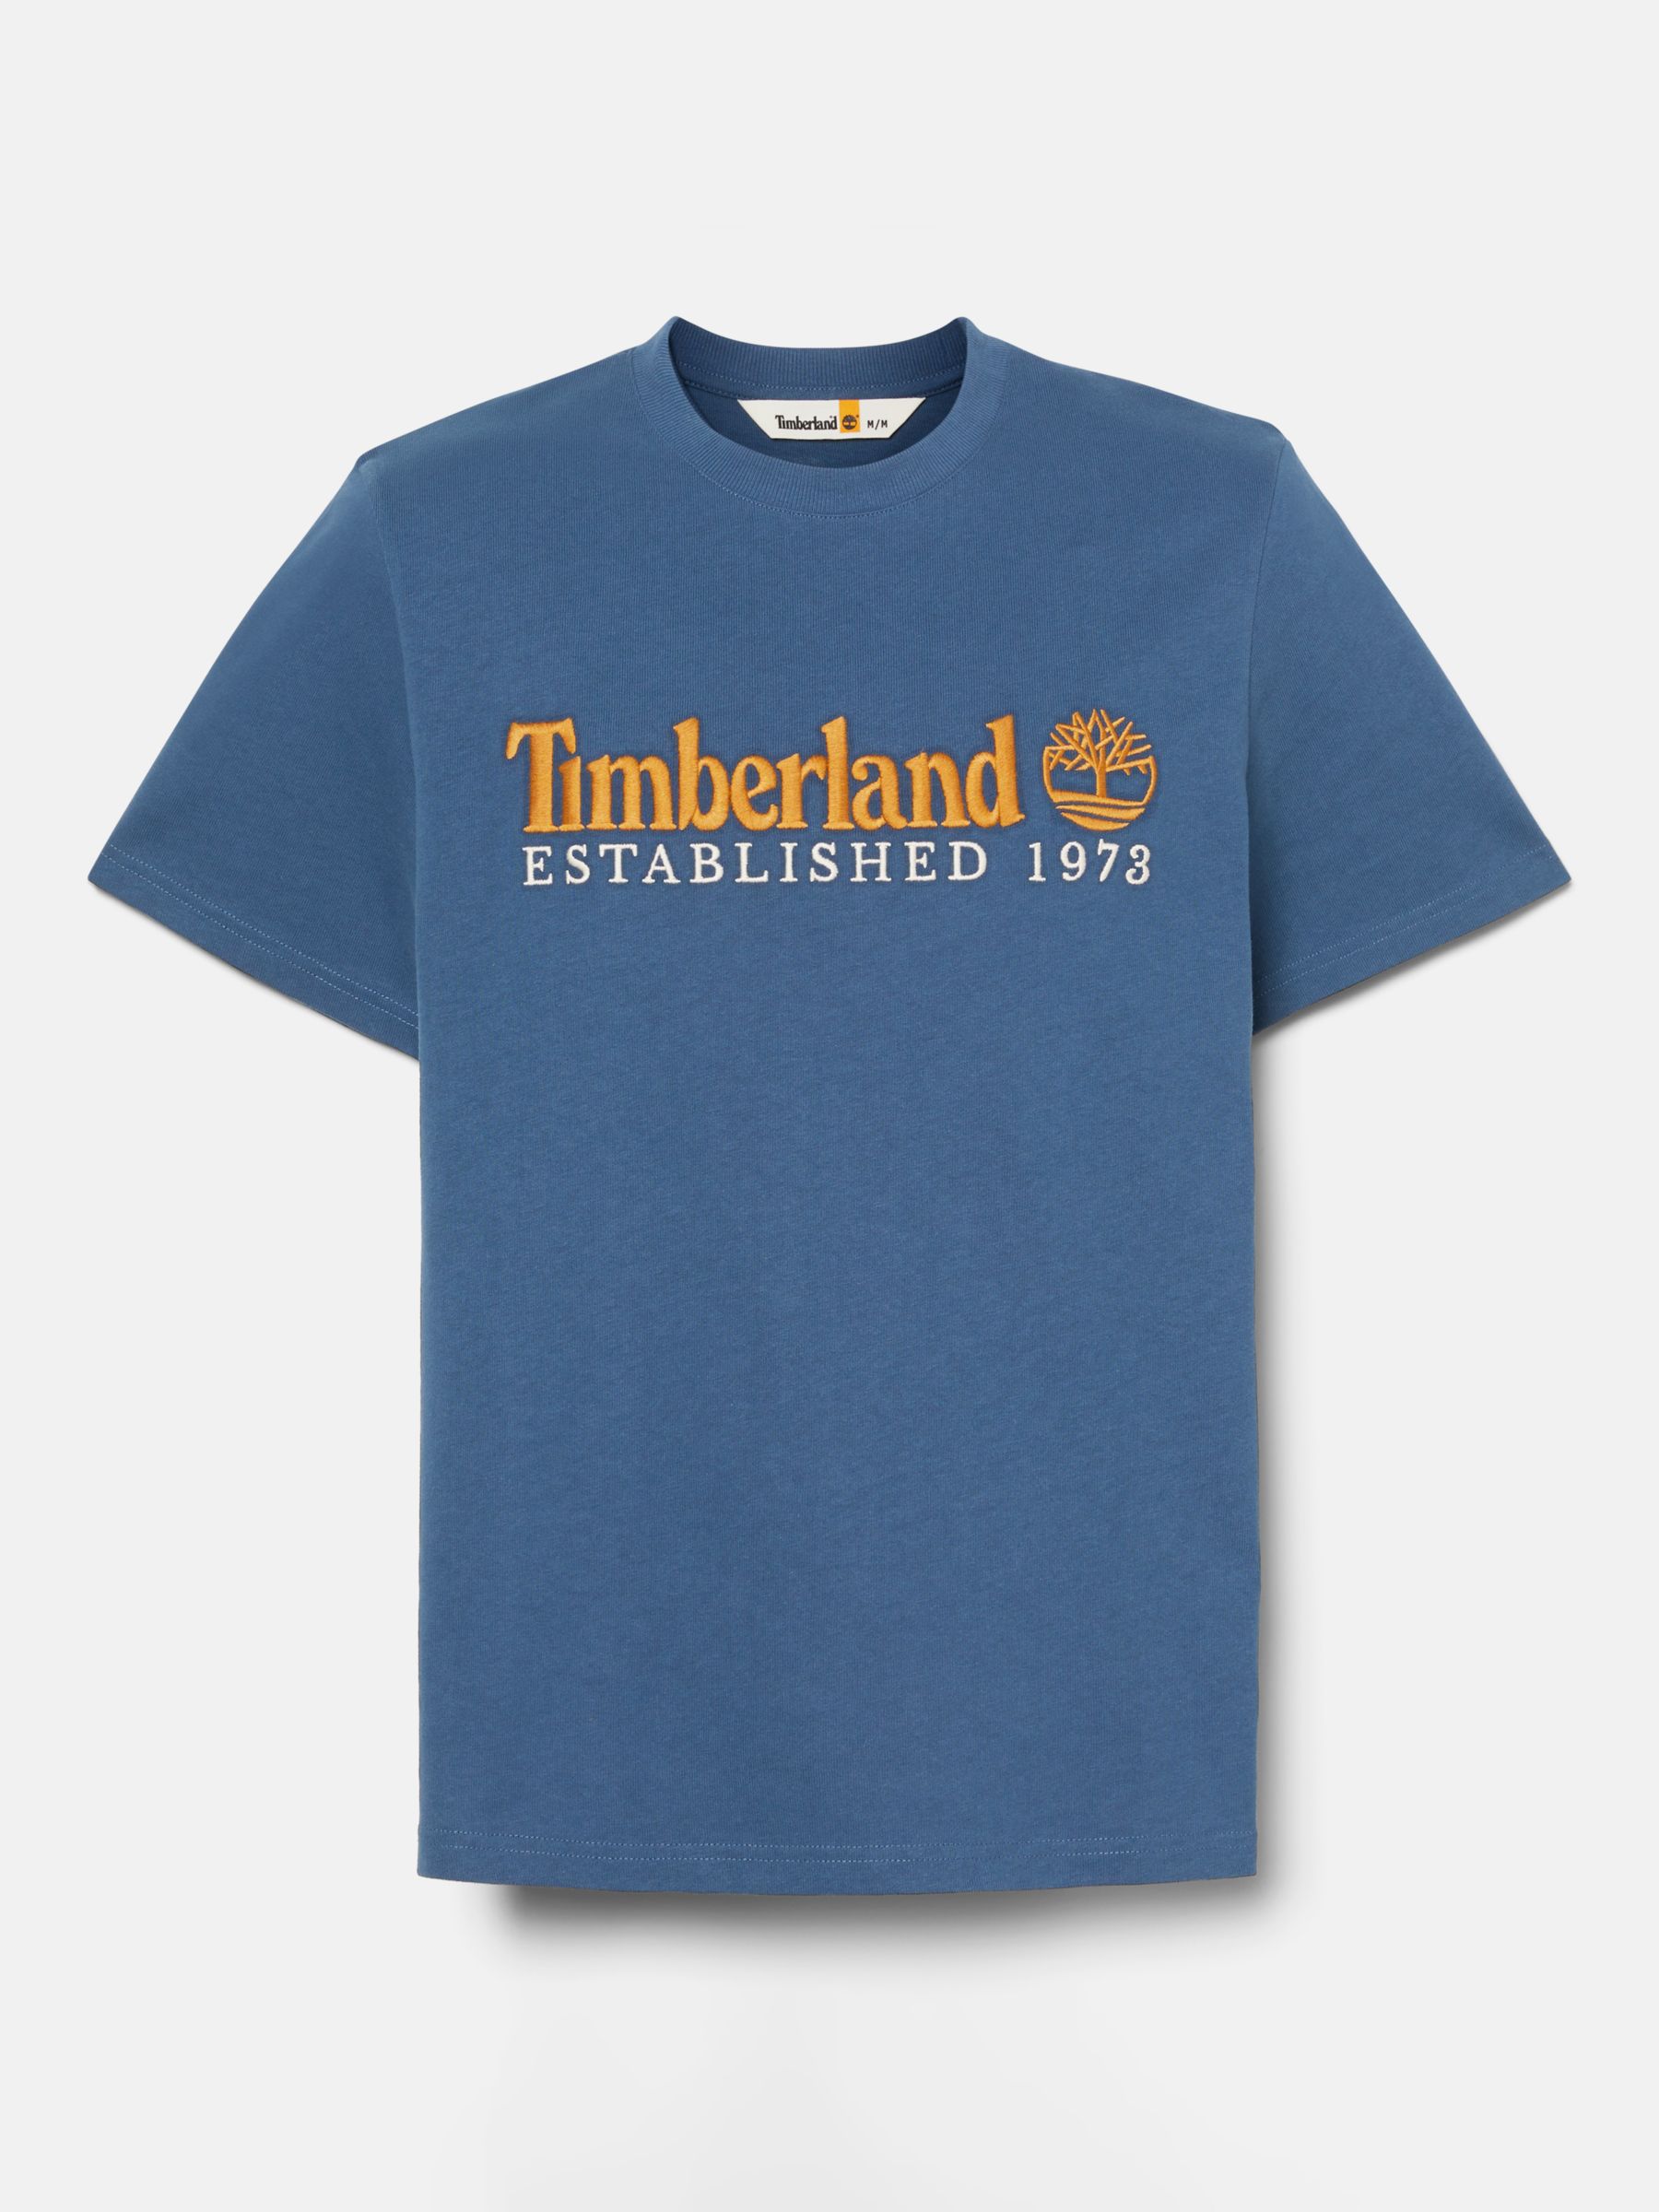 Timberland Organic Cotton Embroided Logo T-Shirt, Dark Denim, S